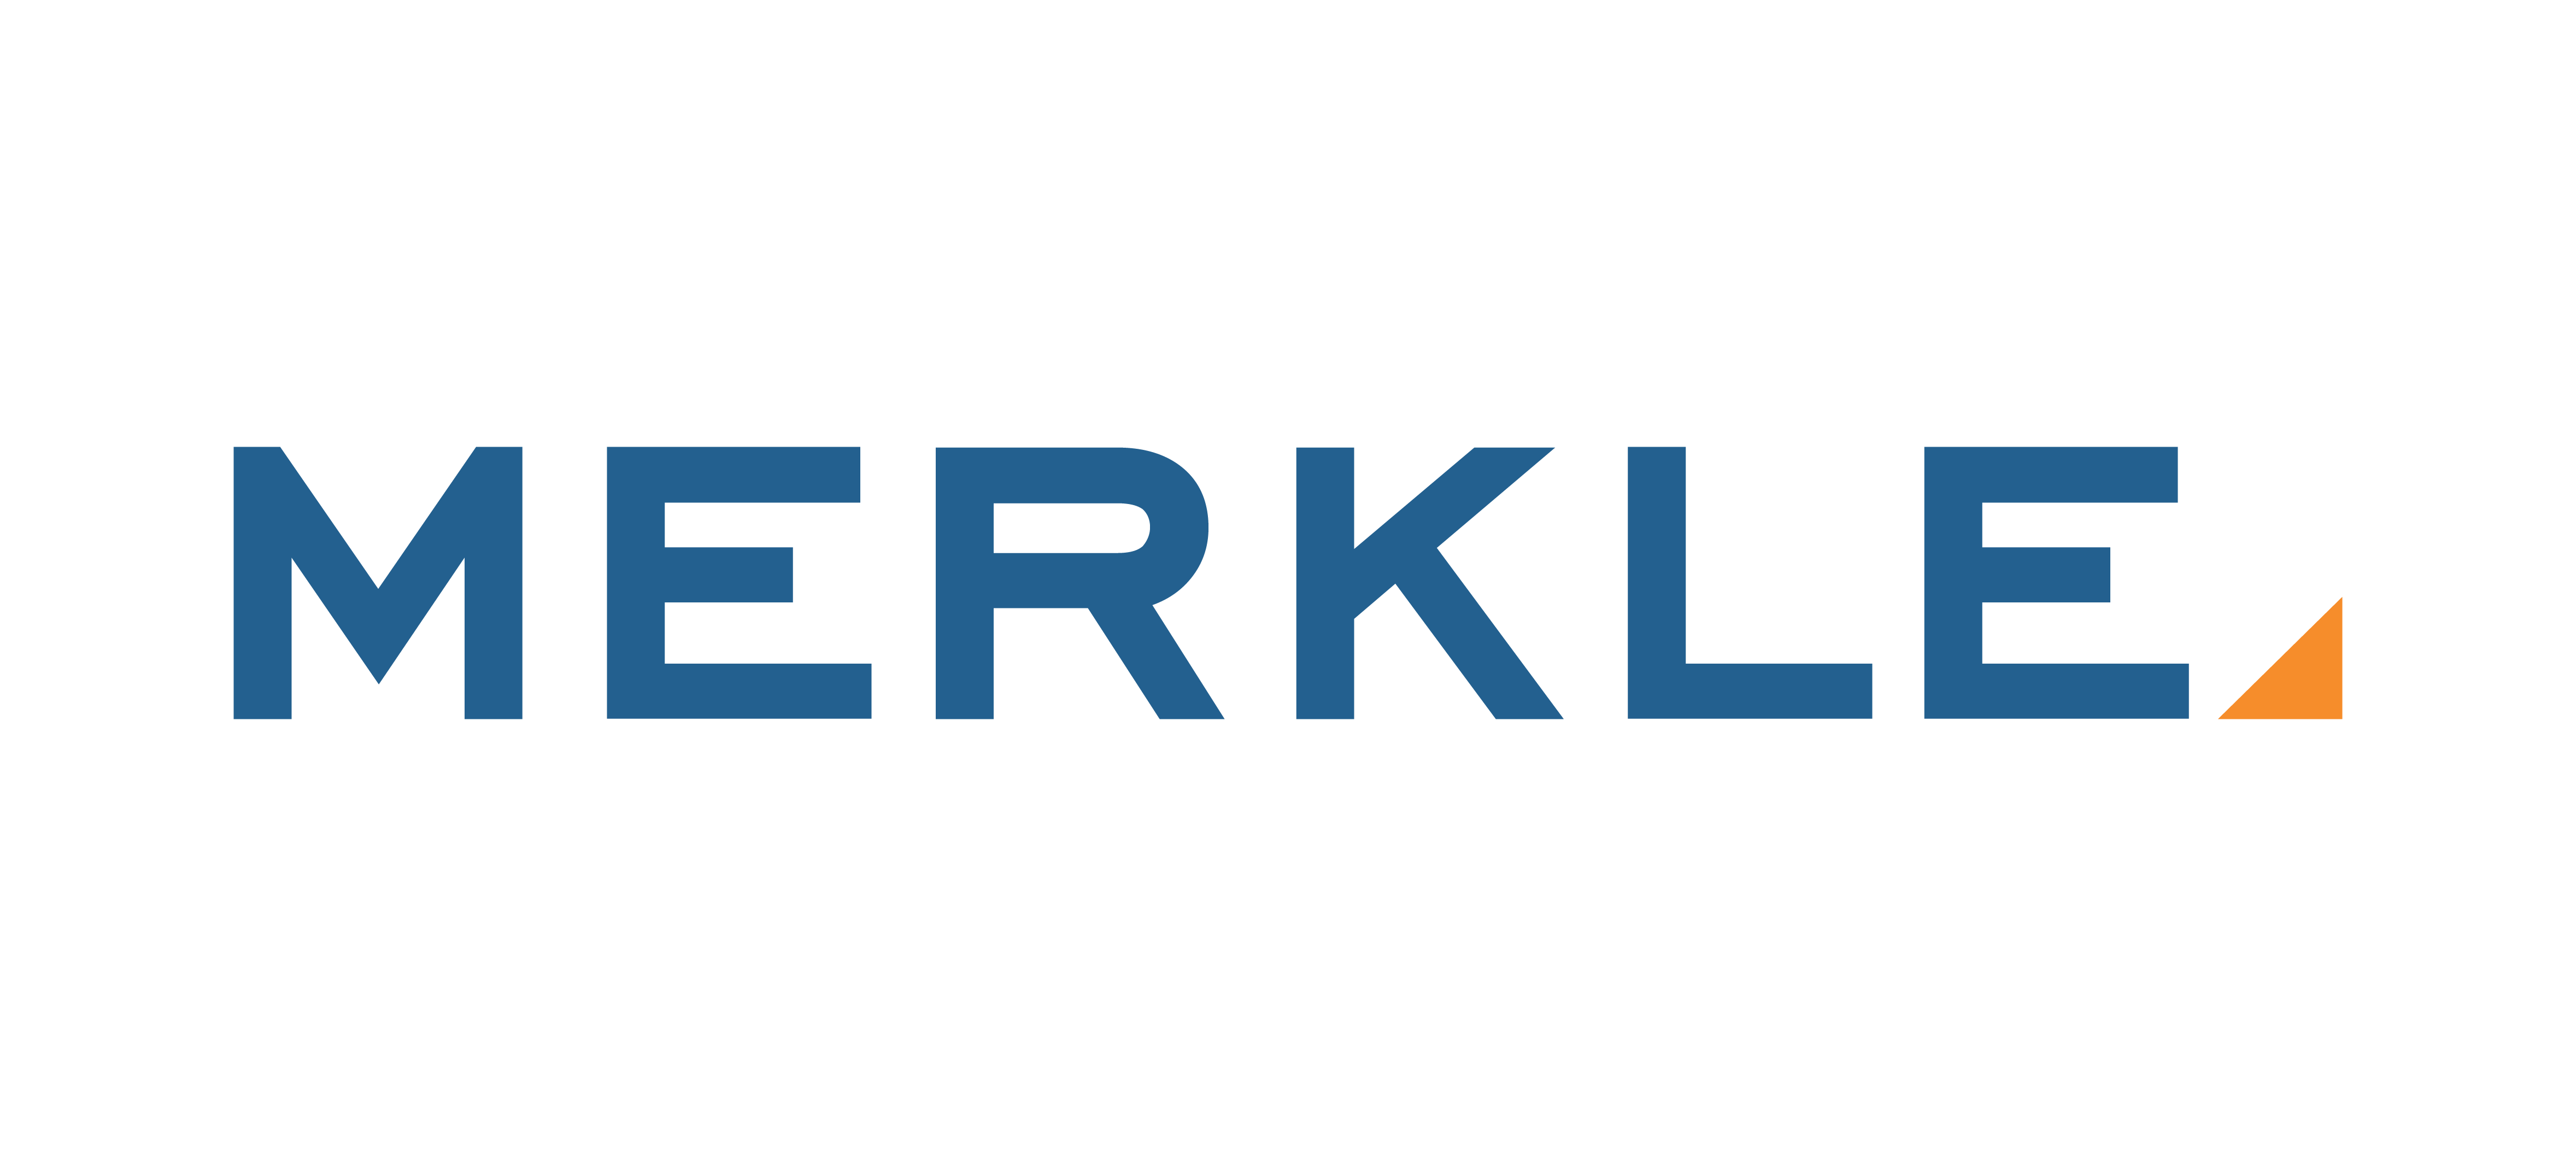 New_Merkle_Logo_NO_TAG